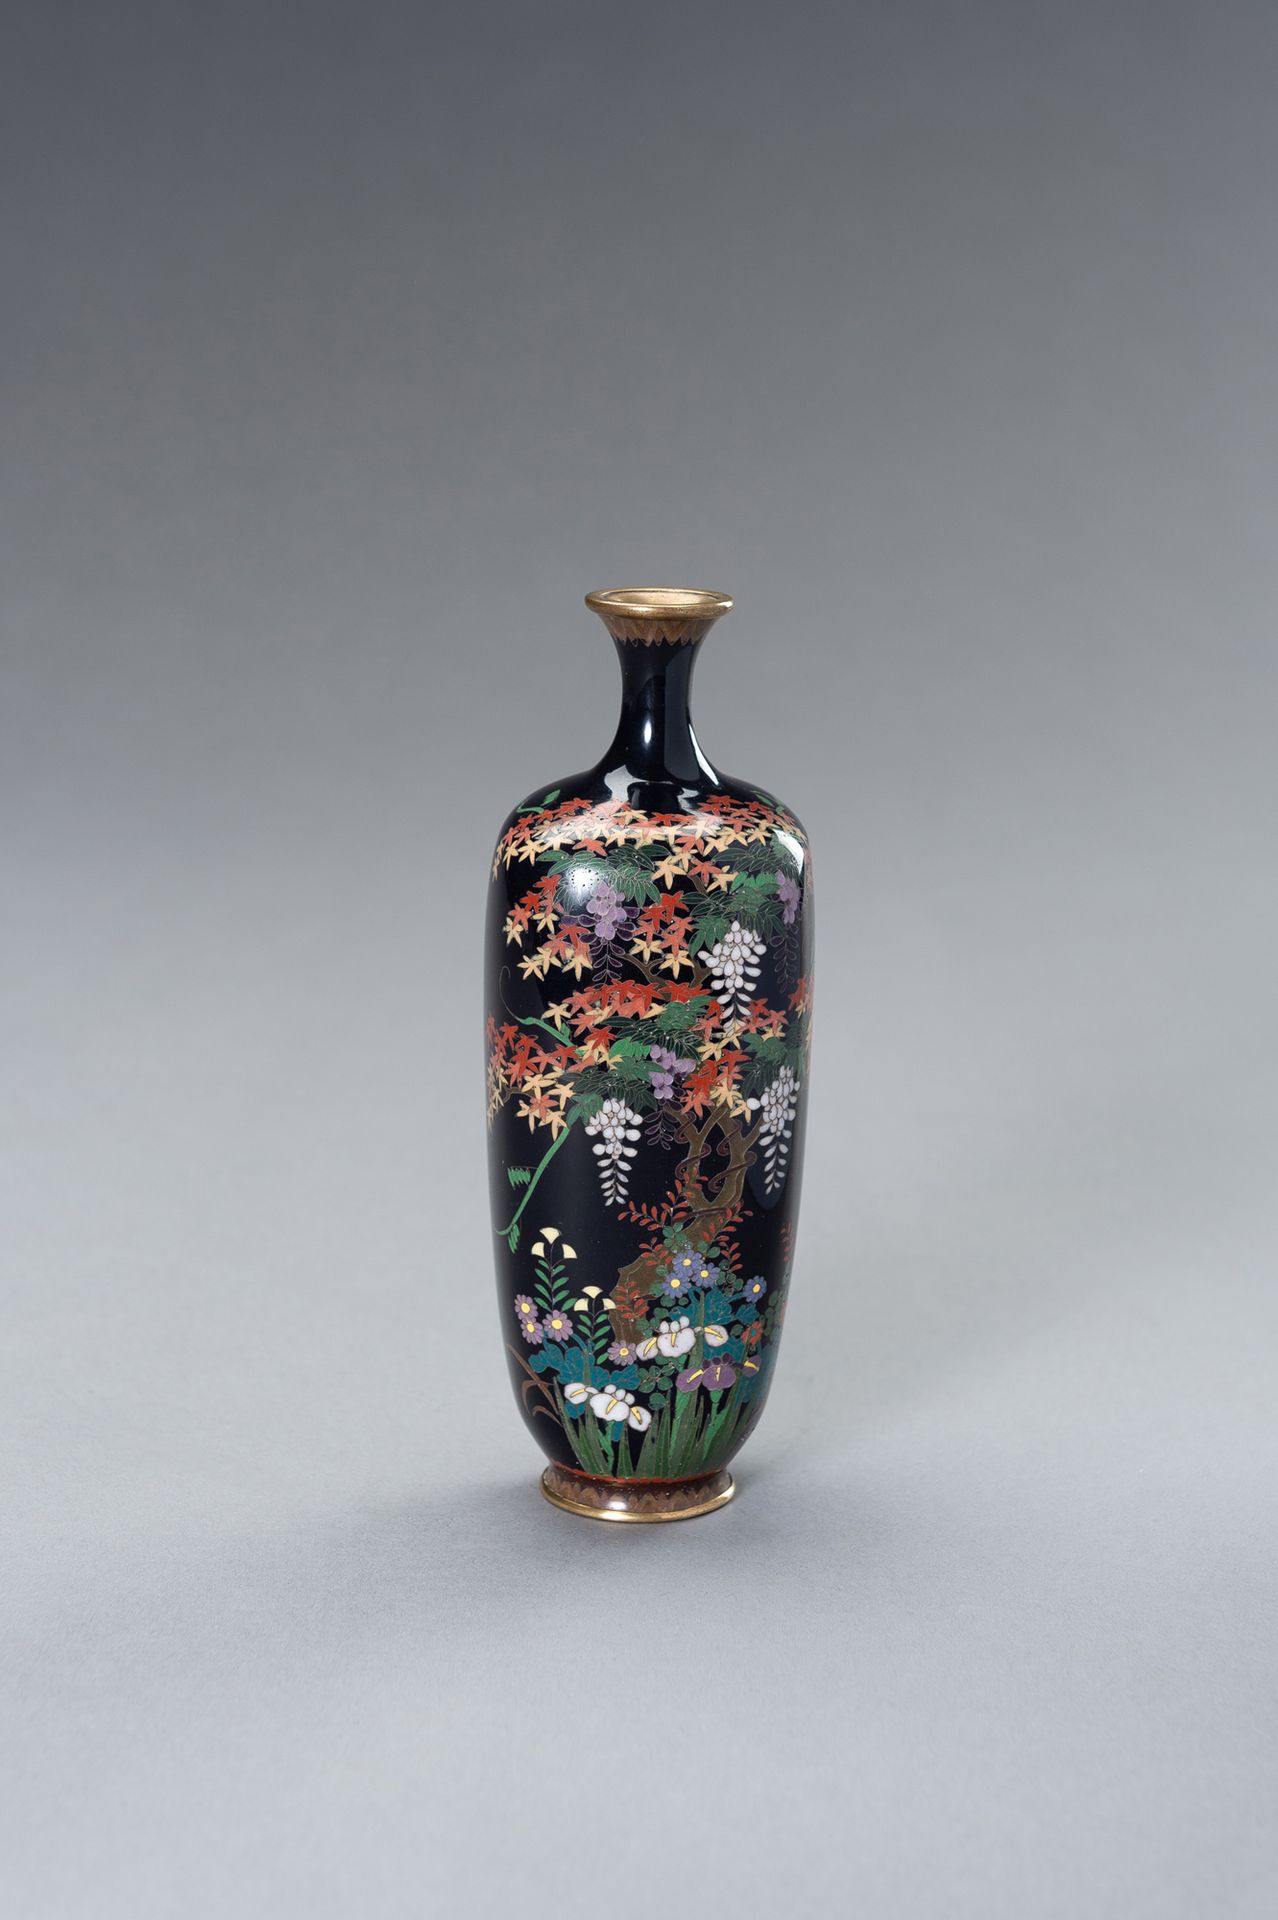 A CLOISONNÉ VASE WITH A MAPLE TREE AND FLOWERS 景泰蓝花瓶
日本，明治时期 (1868-1912)

狭长的颈部和&hellip;